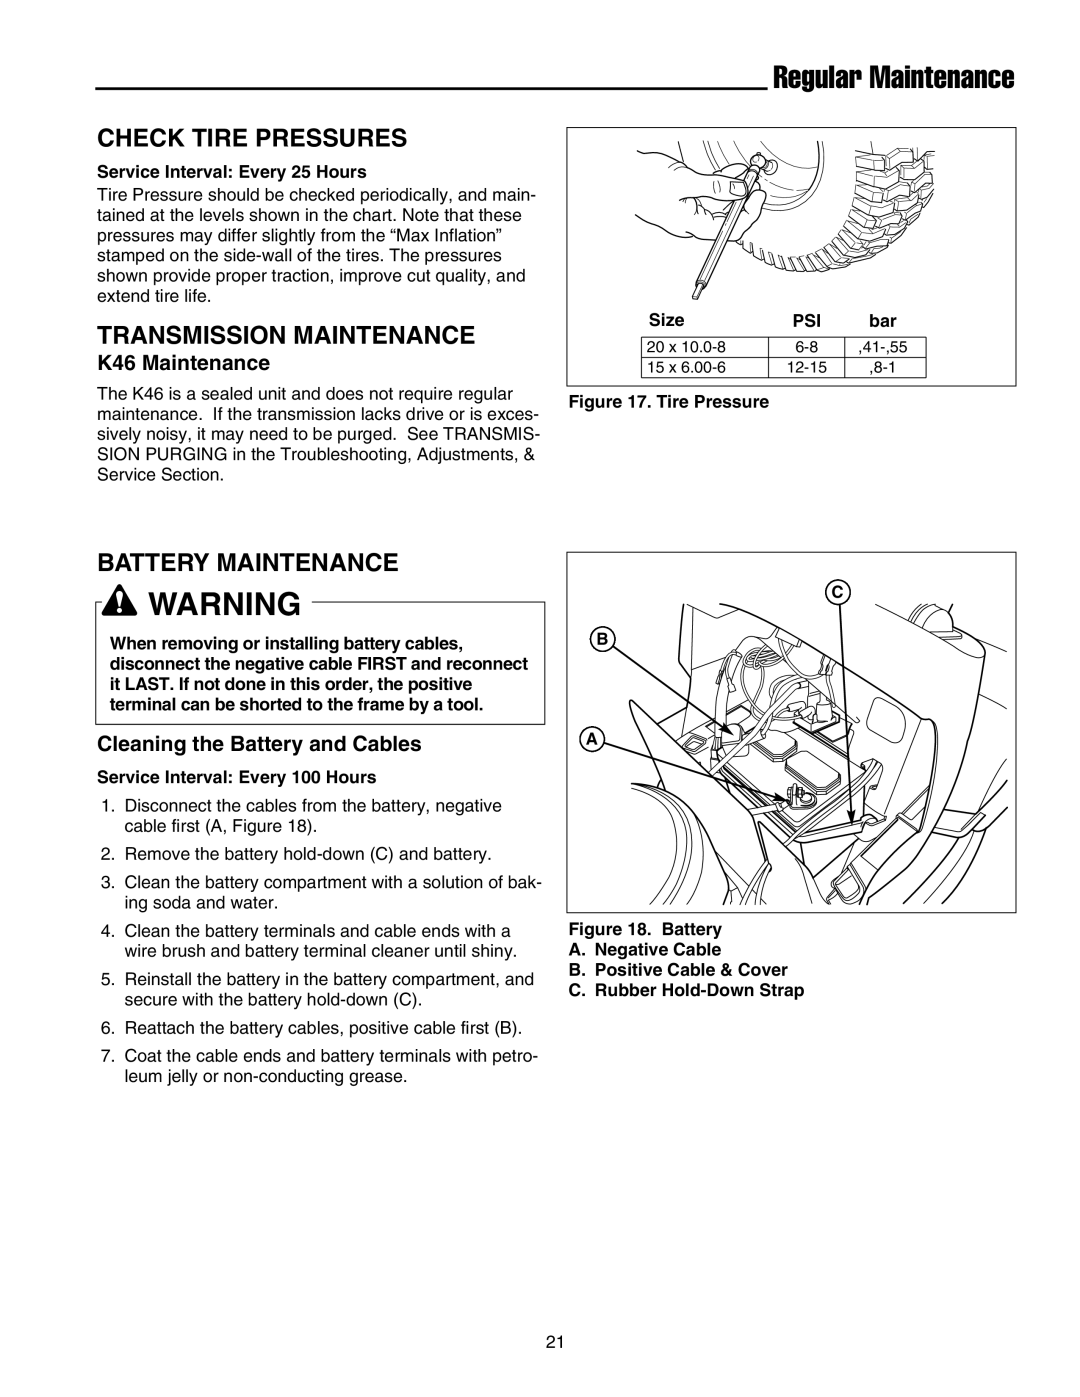 Snapper XL Series manual Regular Maintenance, Check Tire Pressures, Transmission Maintenance, Battery Maintenance 